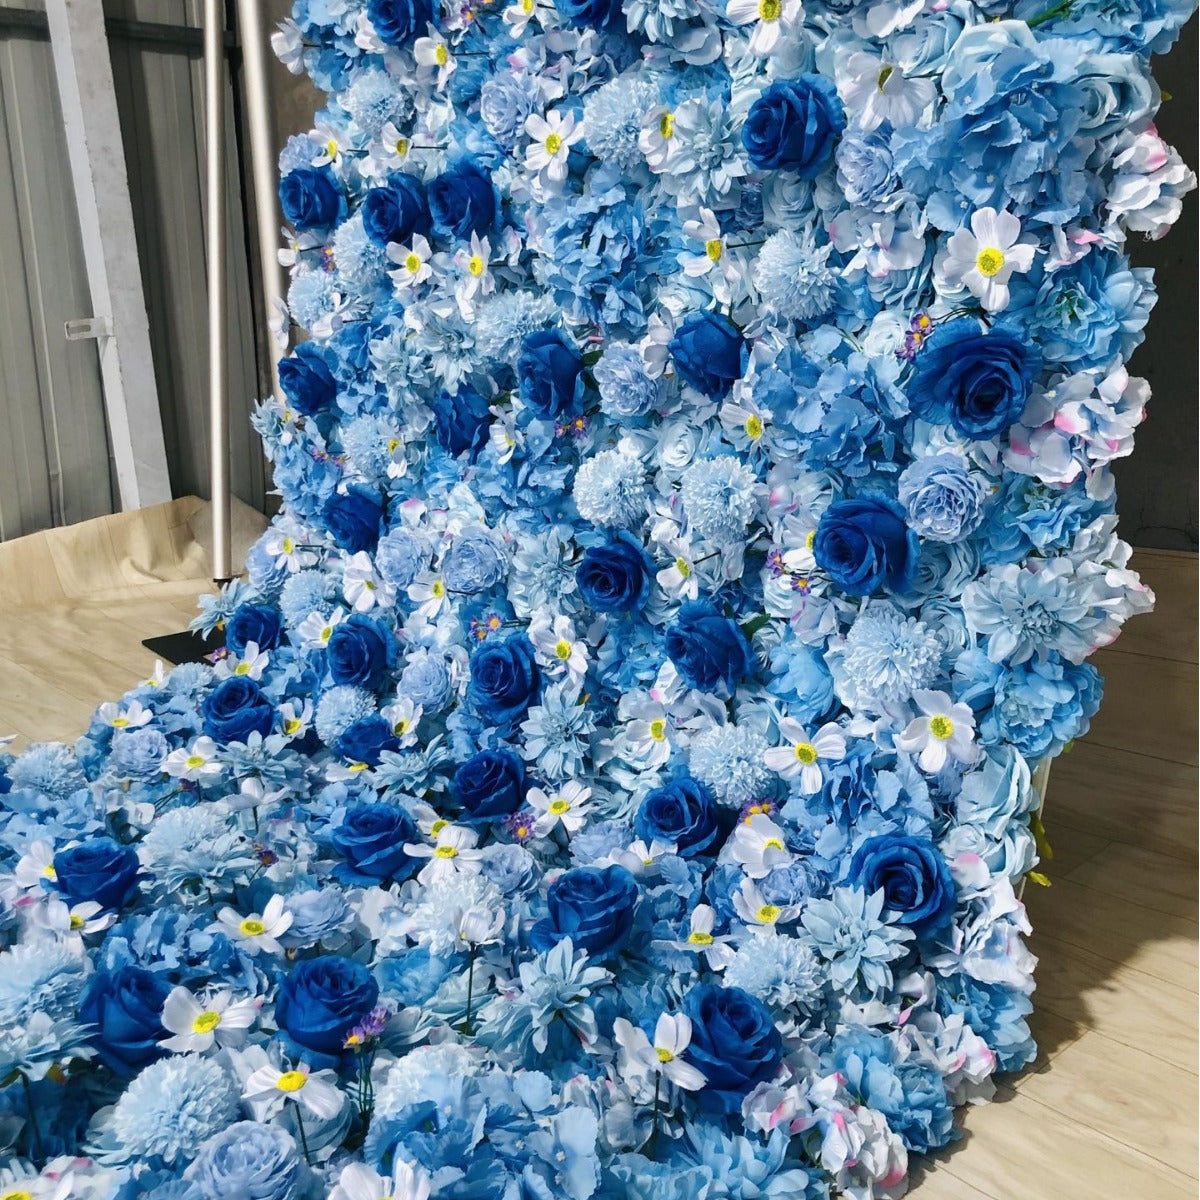 3D Artificial Flower Wall Arrangement Wedding Party Birthday Backdrop Decor HQ3963